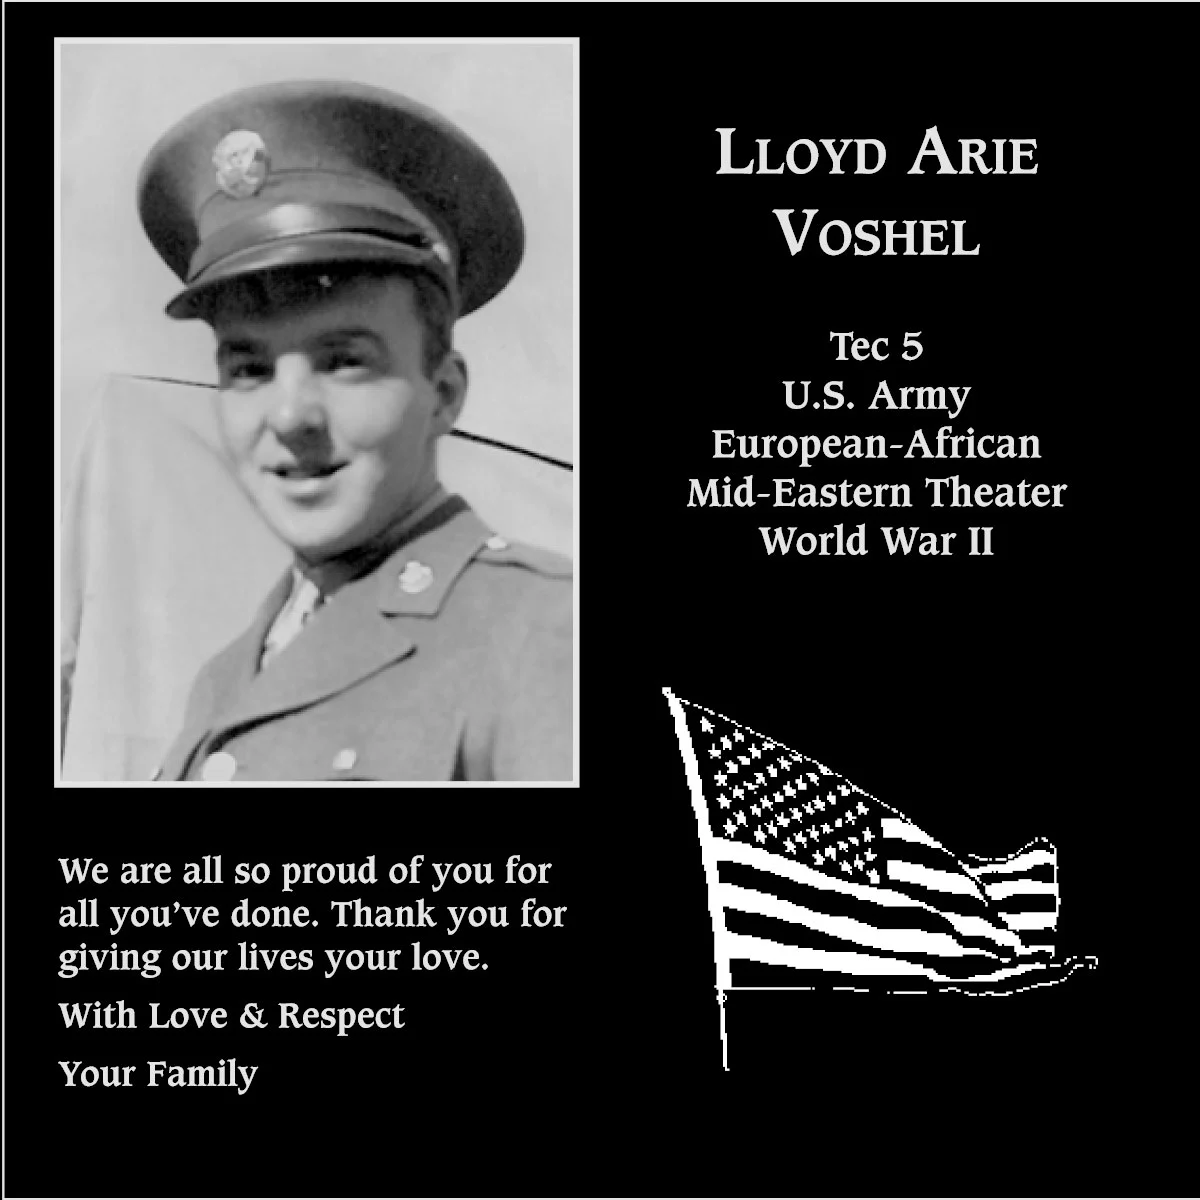 Lloyd Arie Voshel